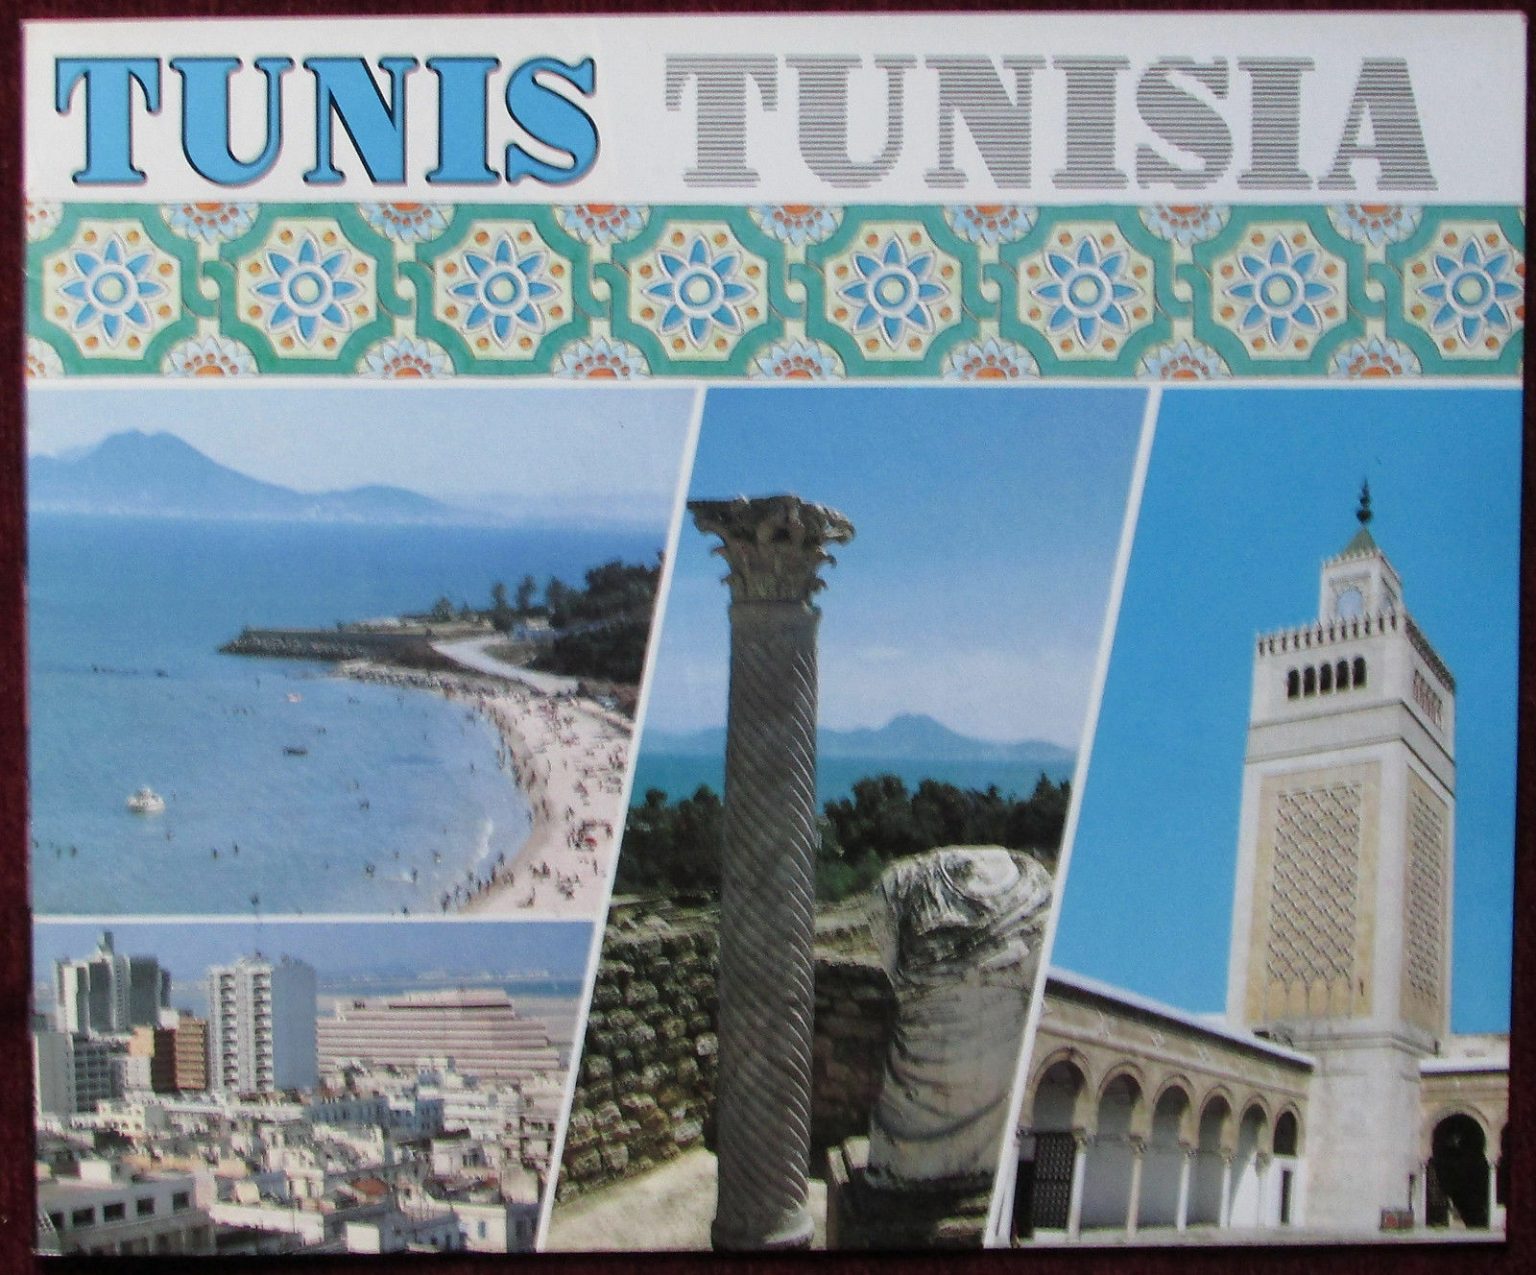 travel books on tunisia